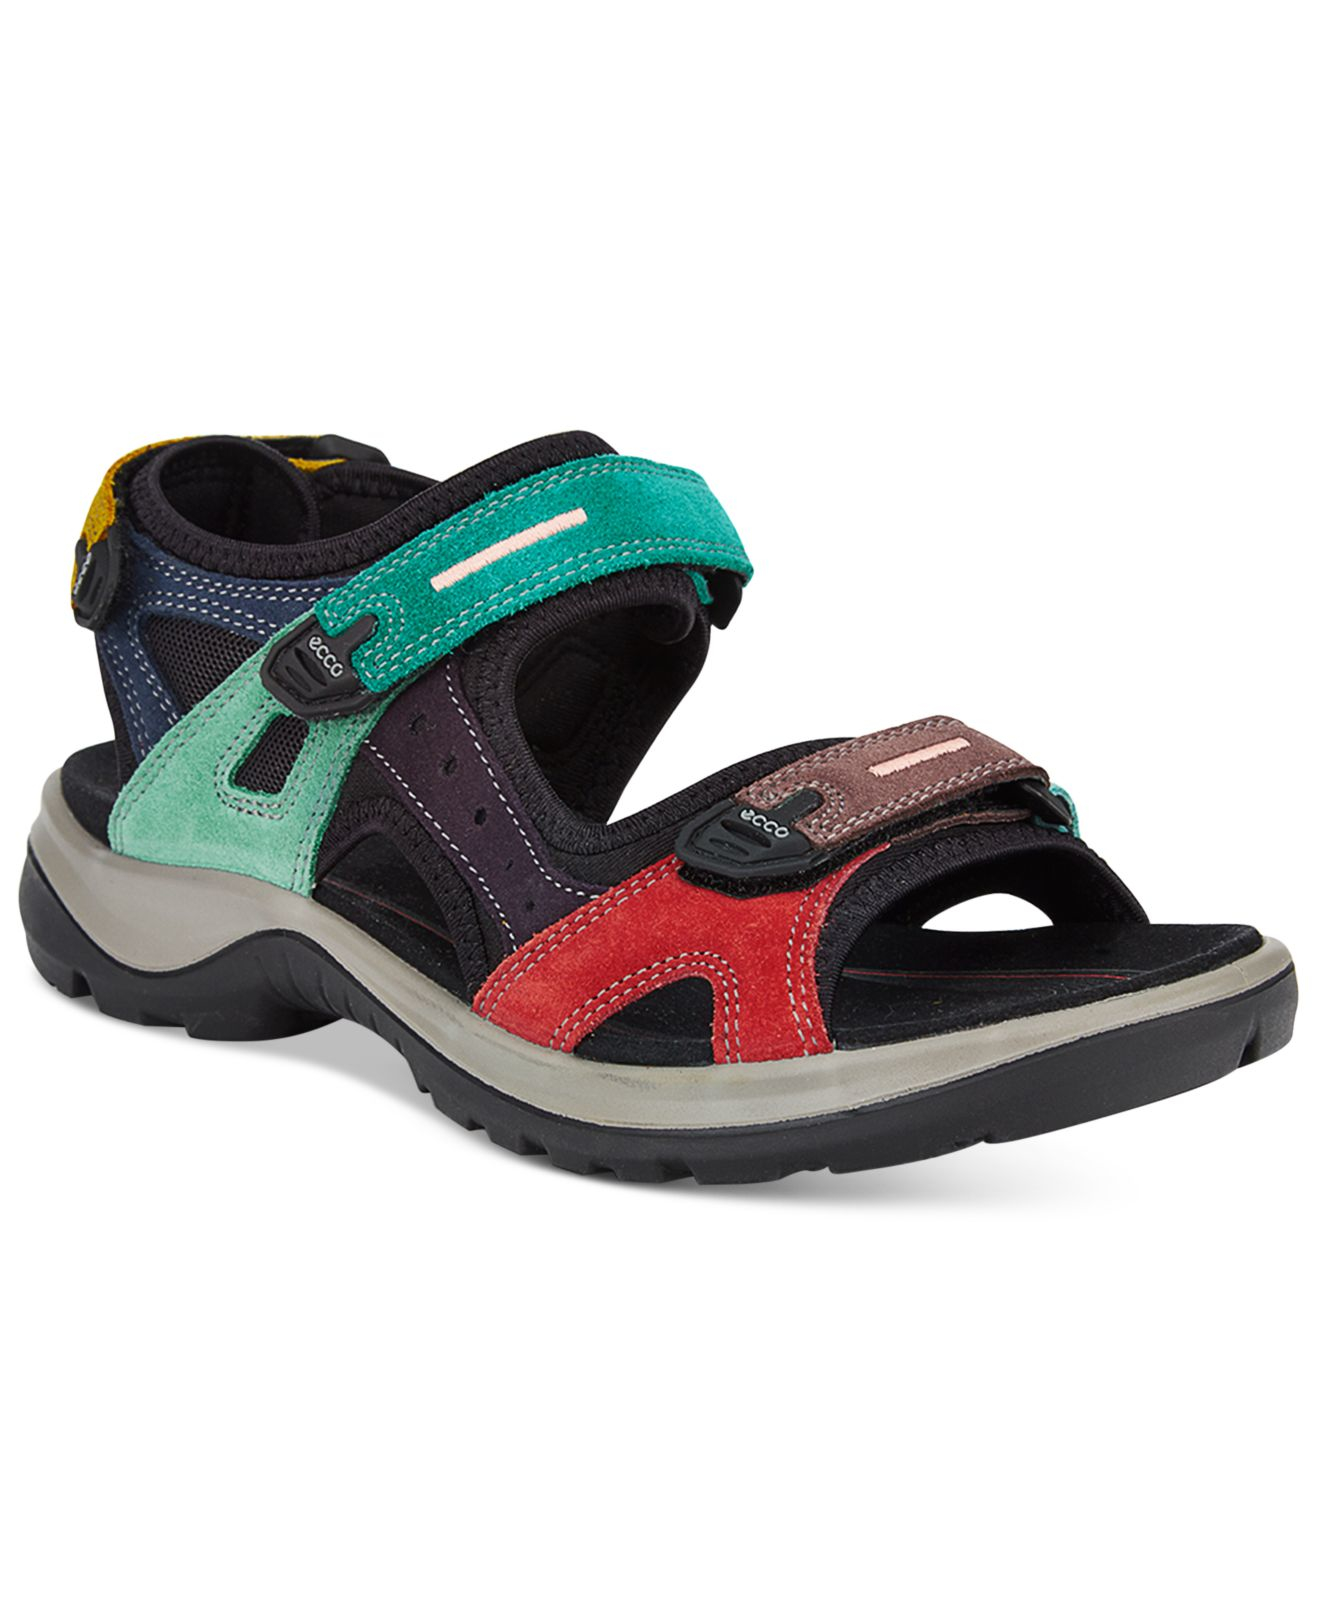 Buy > ecco anniversary yucatan sandals > in stock